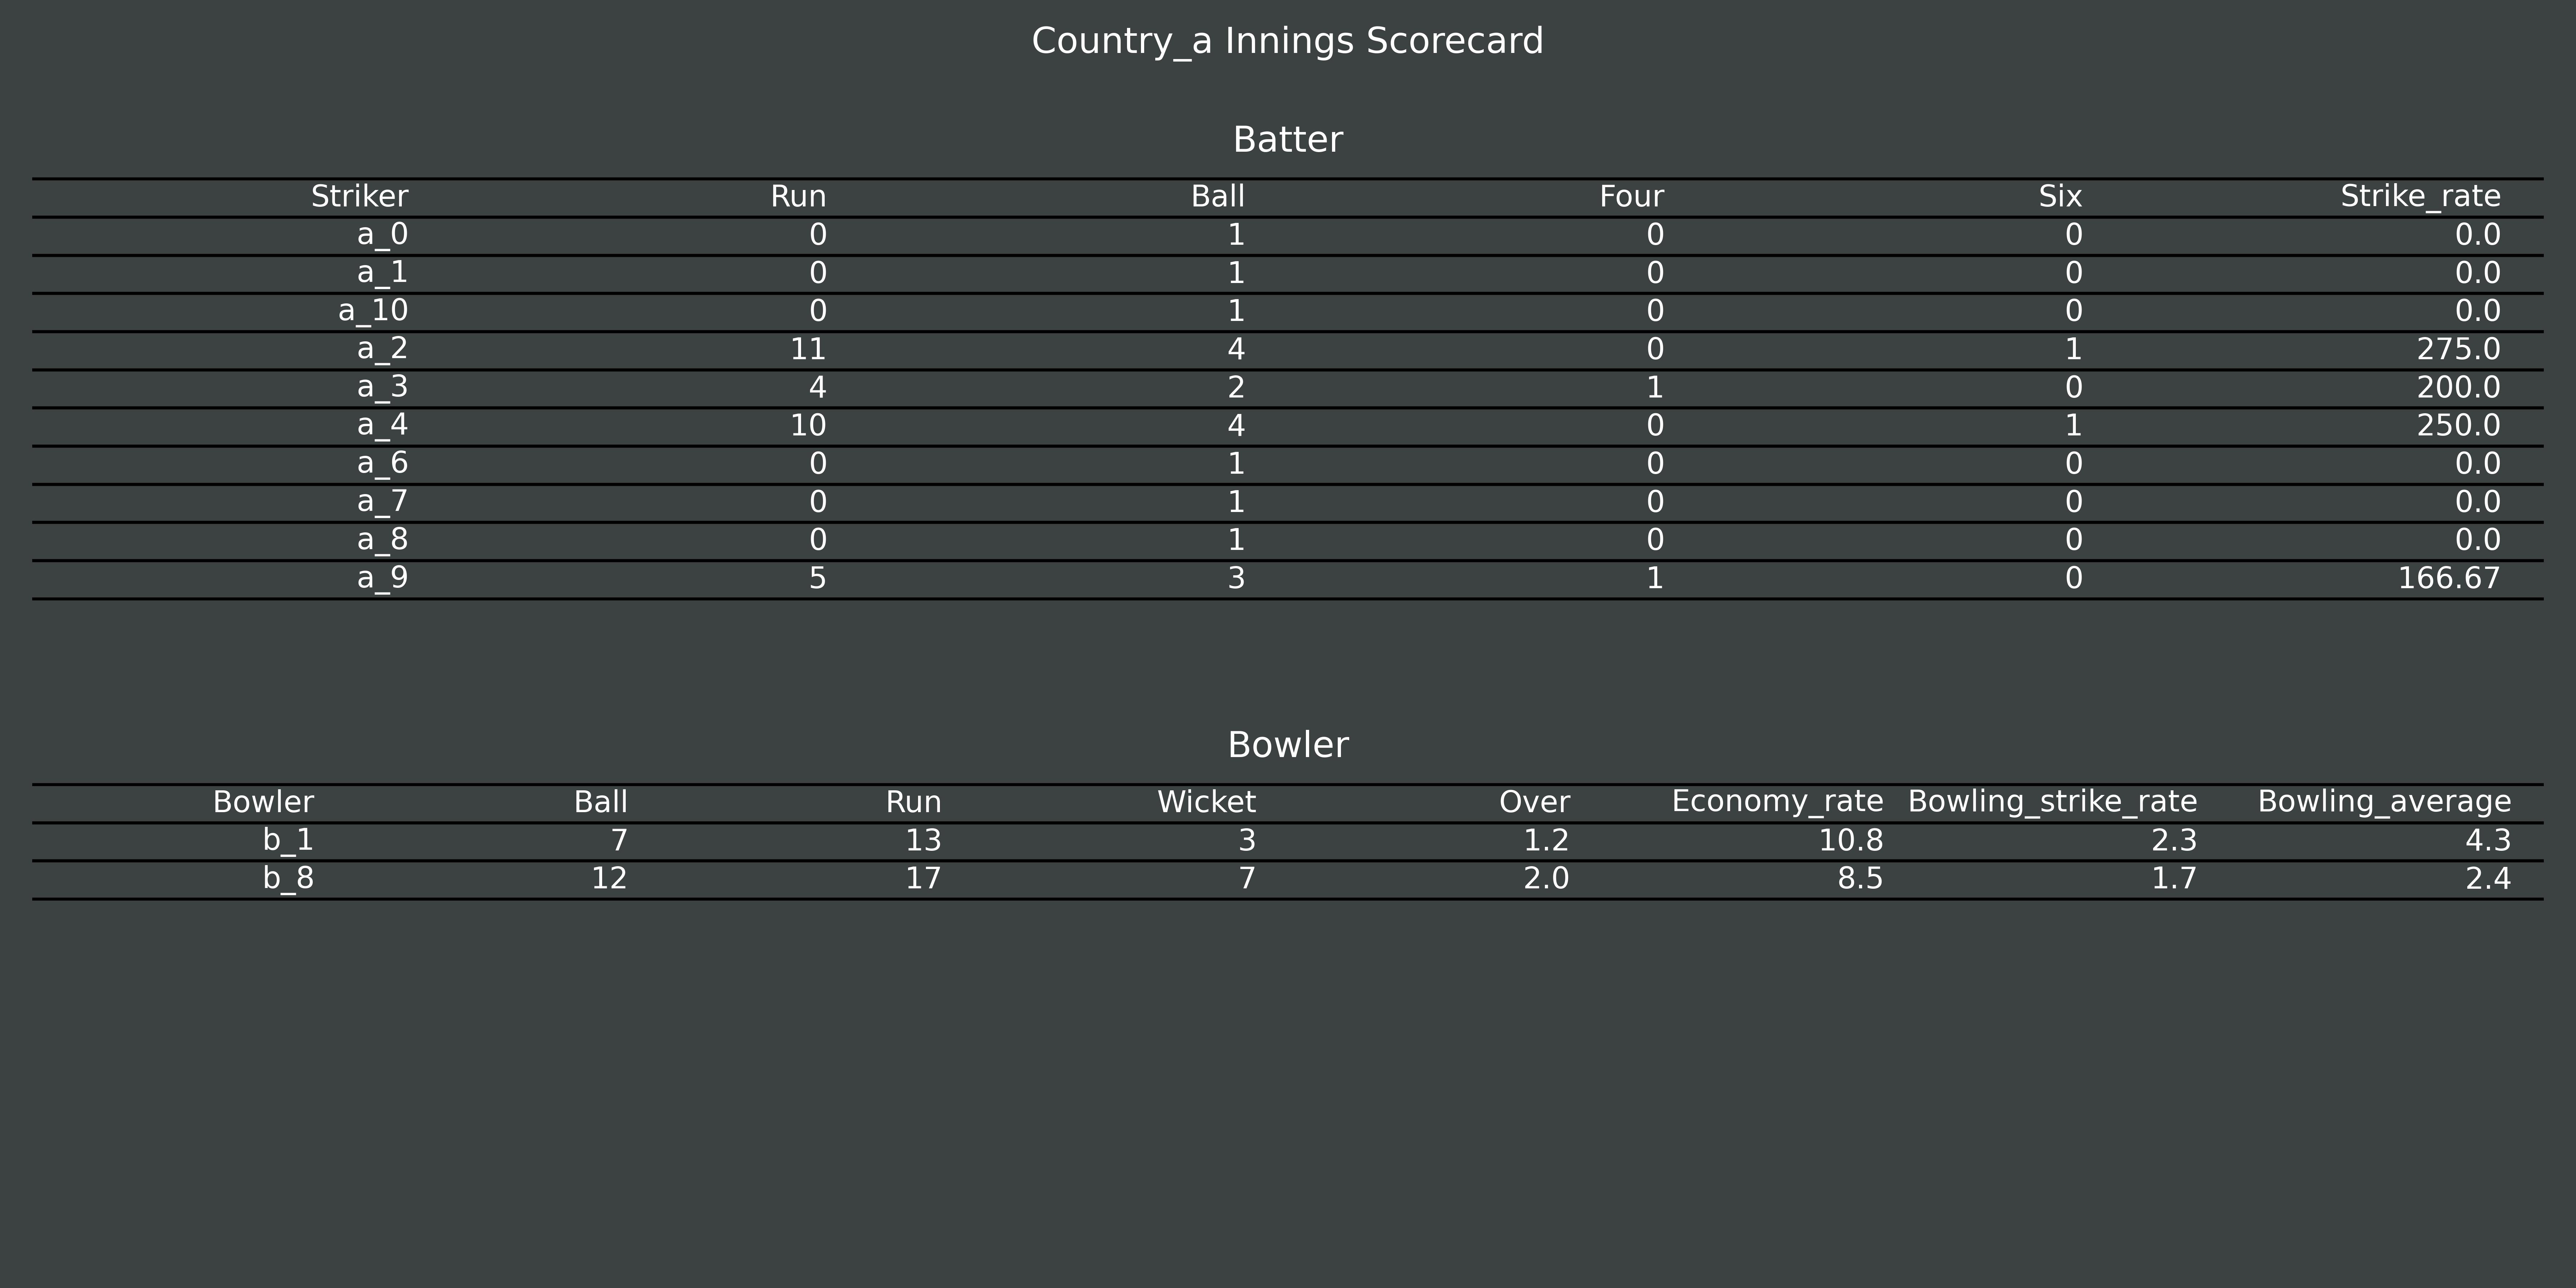 Country_a Scorecard.jpg